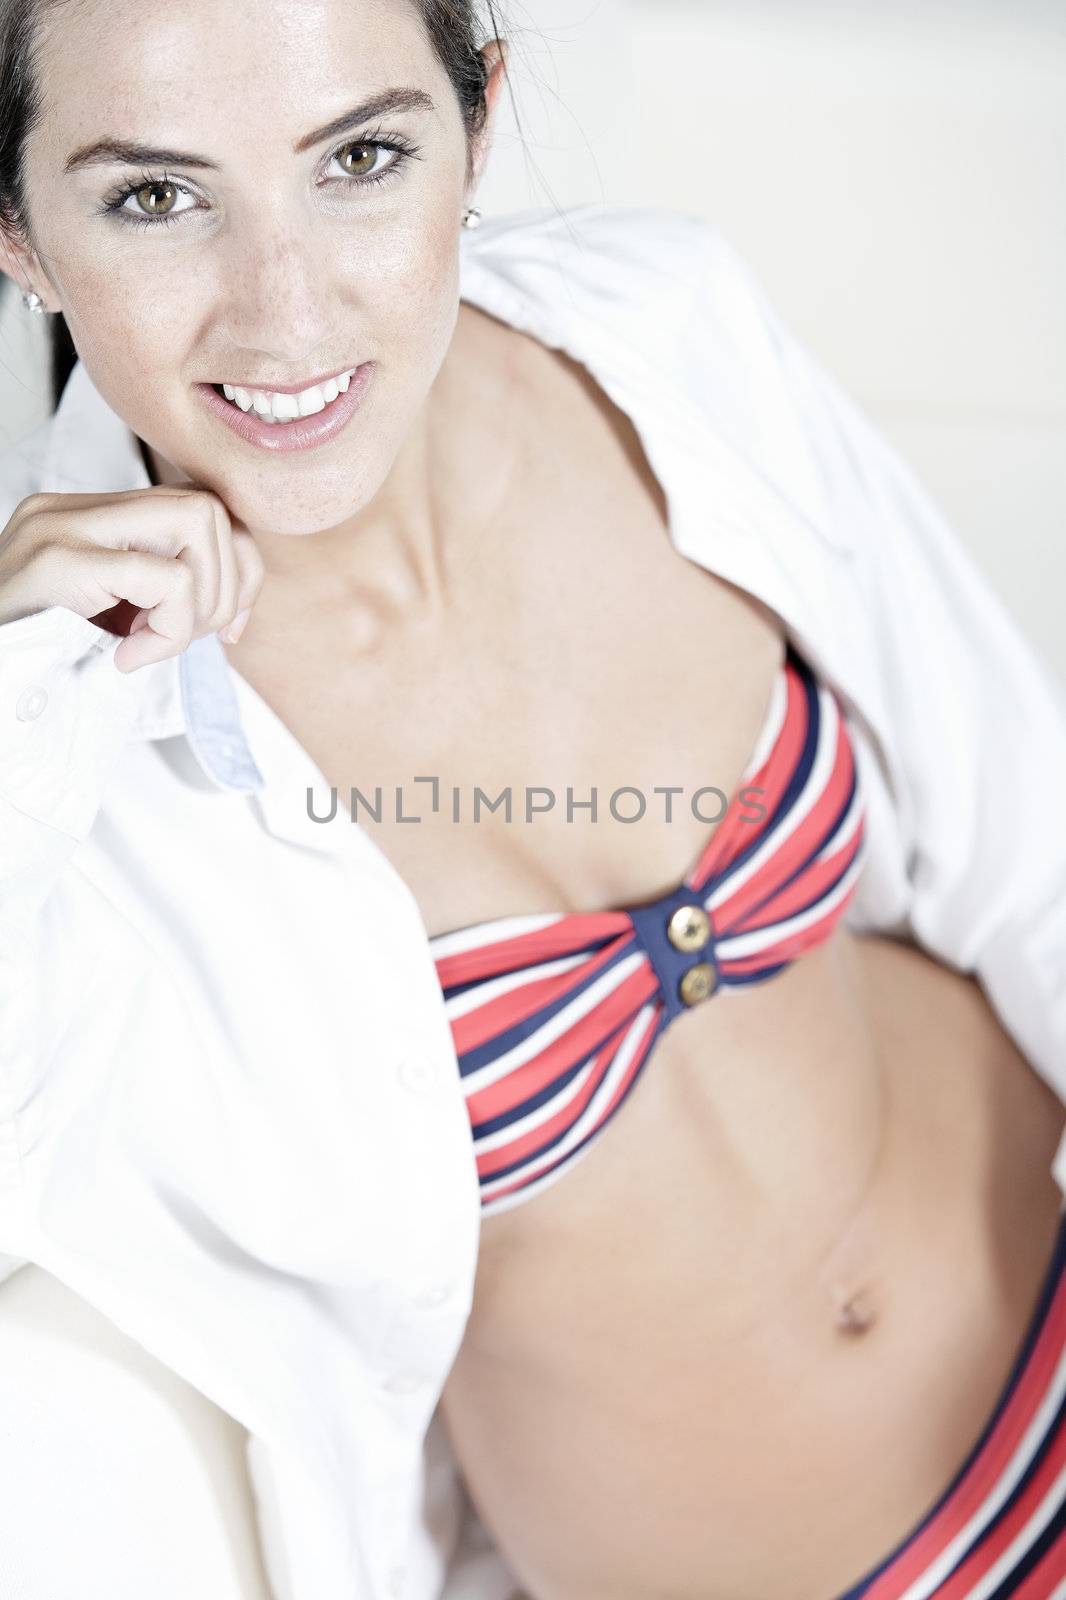 Woman in red bikini and white shirt by studiofi